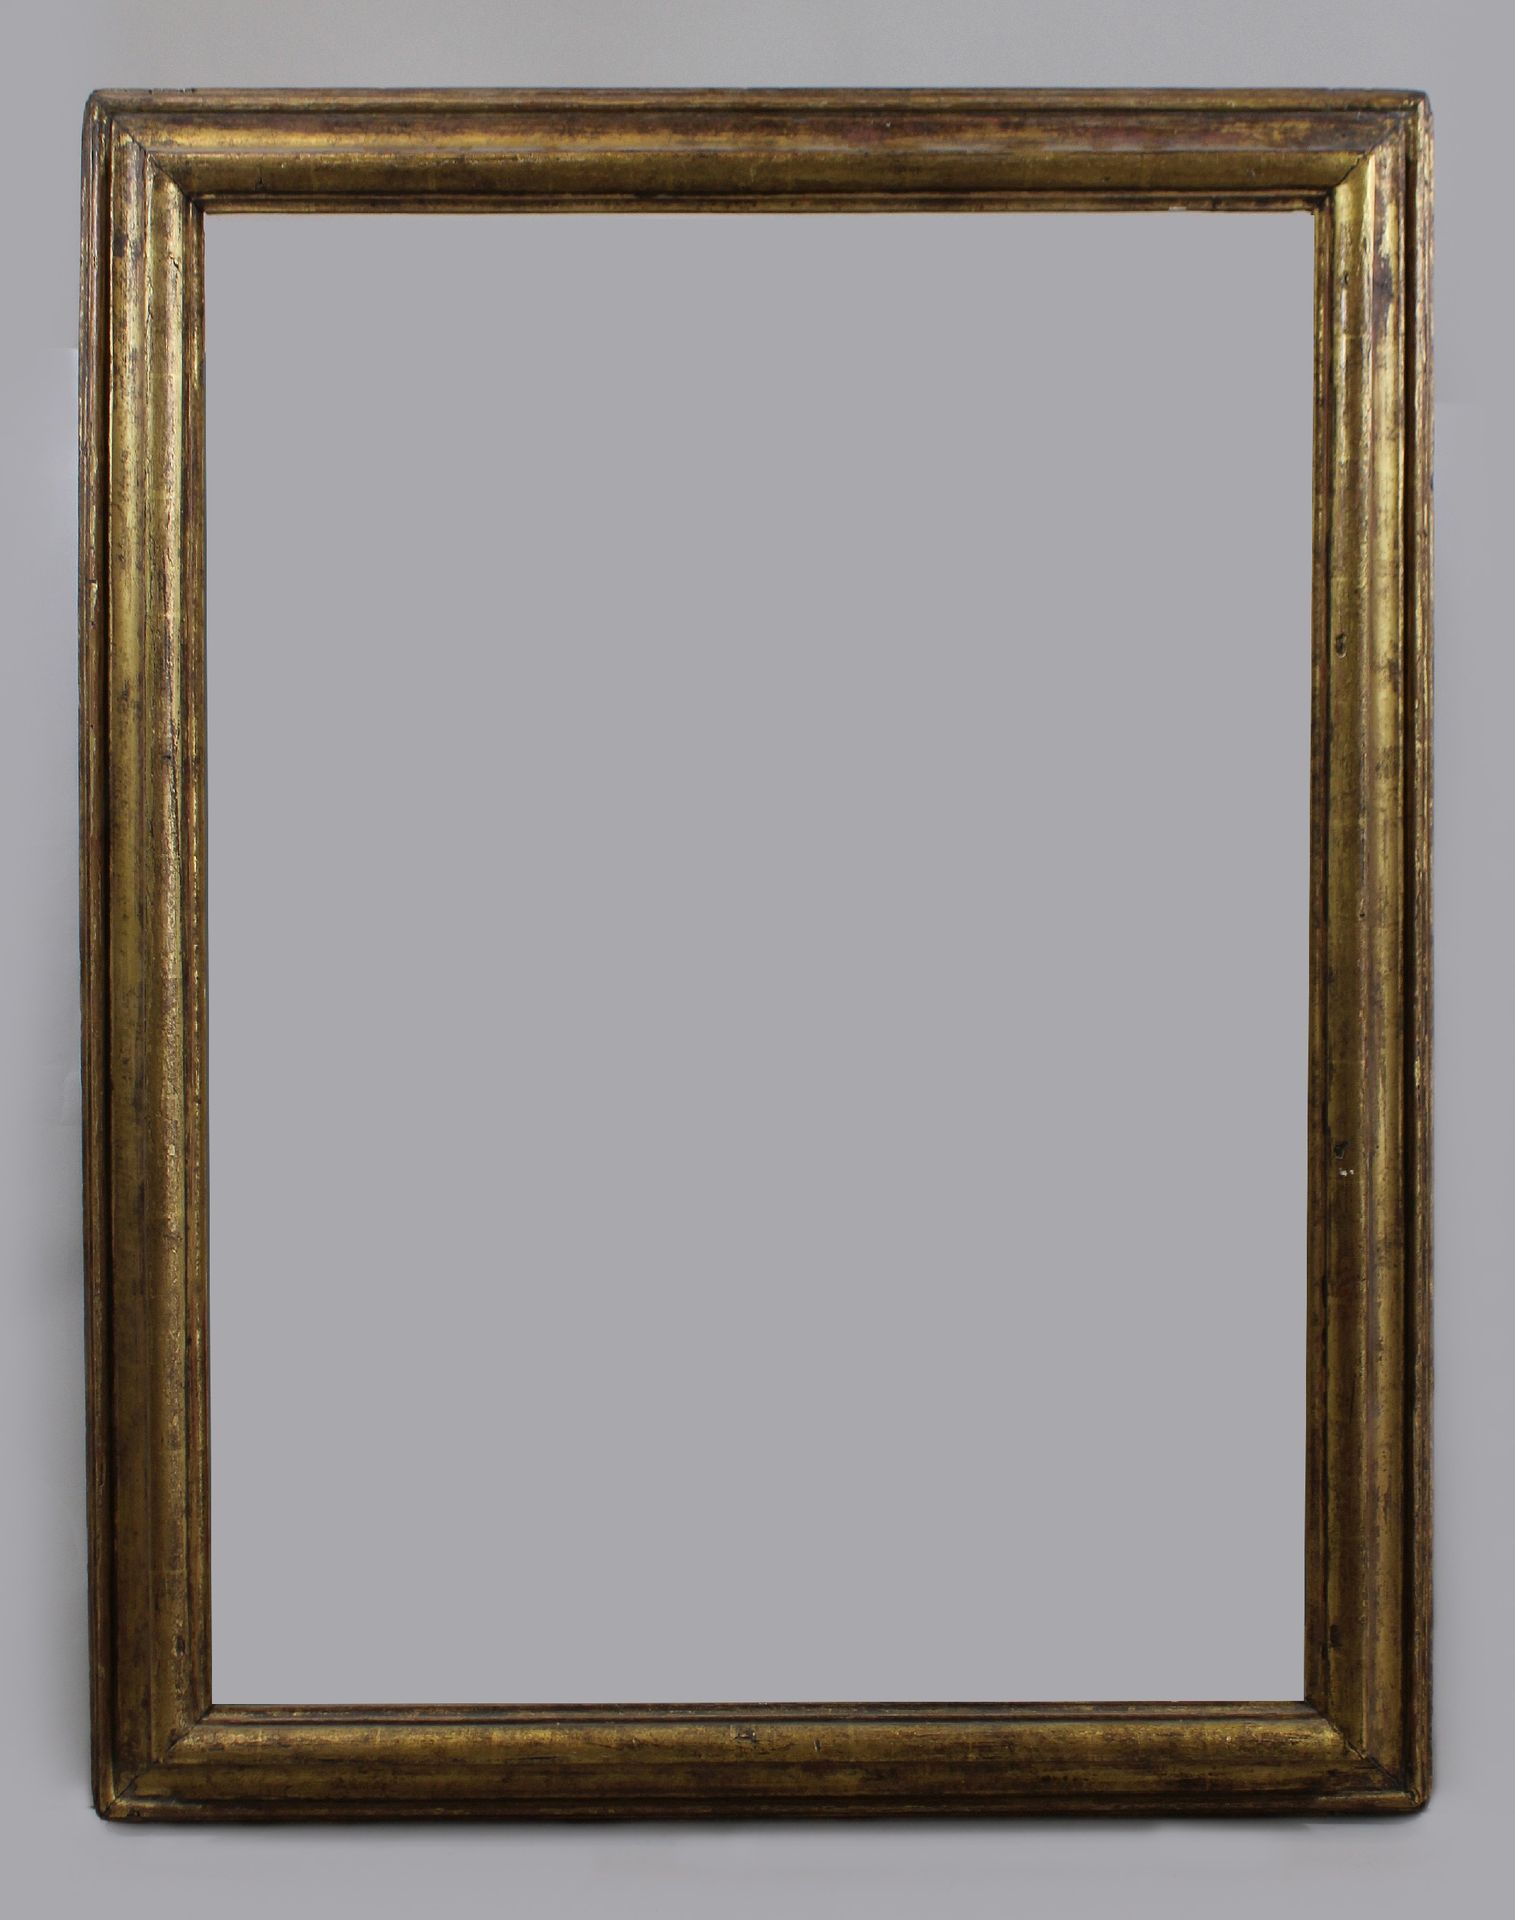 Italienischer Profilrahmen, 18. Jh. Italian profile frame, 18th century, gilded,&hellip;